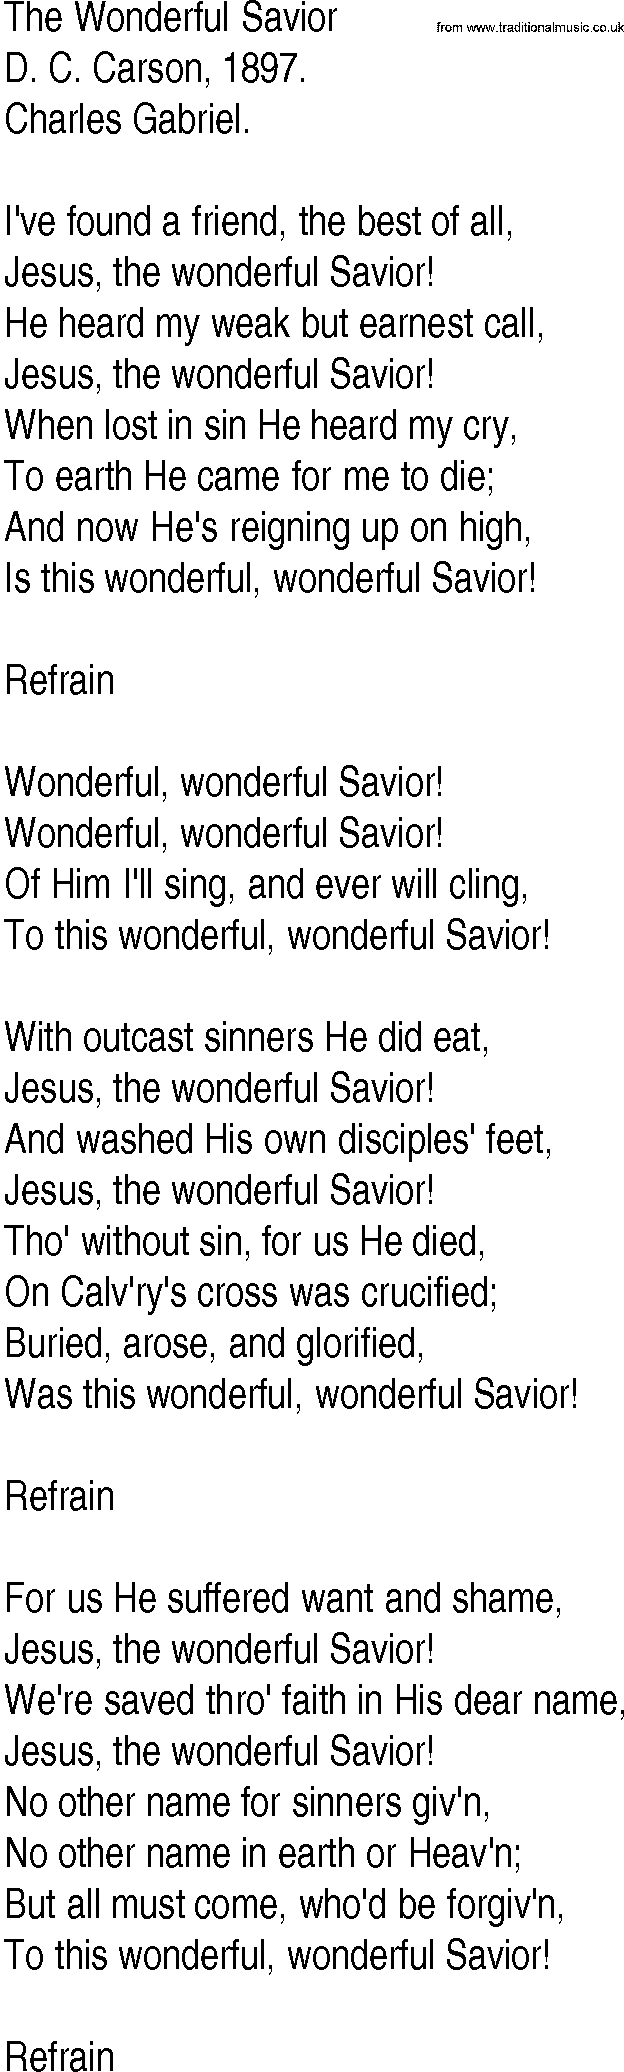 Hymn and Gospel Song: The Wonderful Savior by D C Carson lyrics